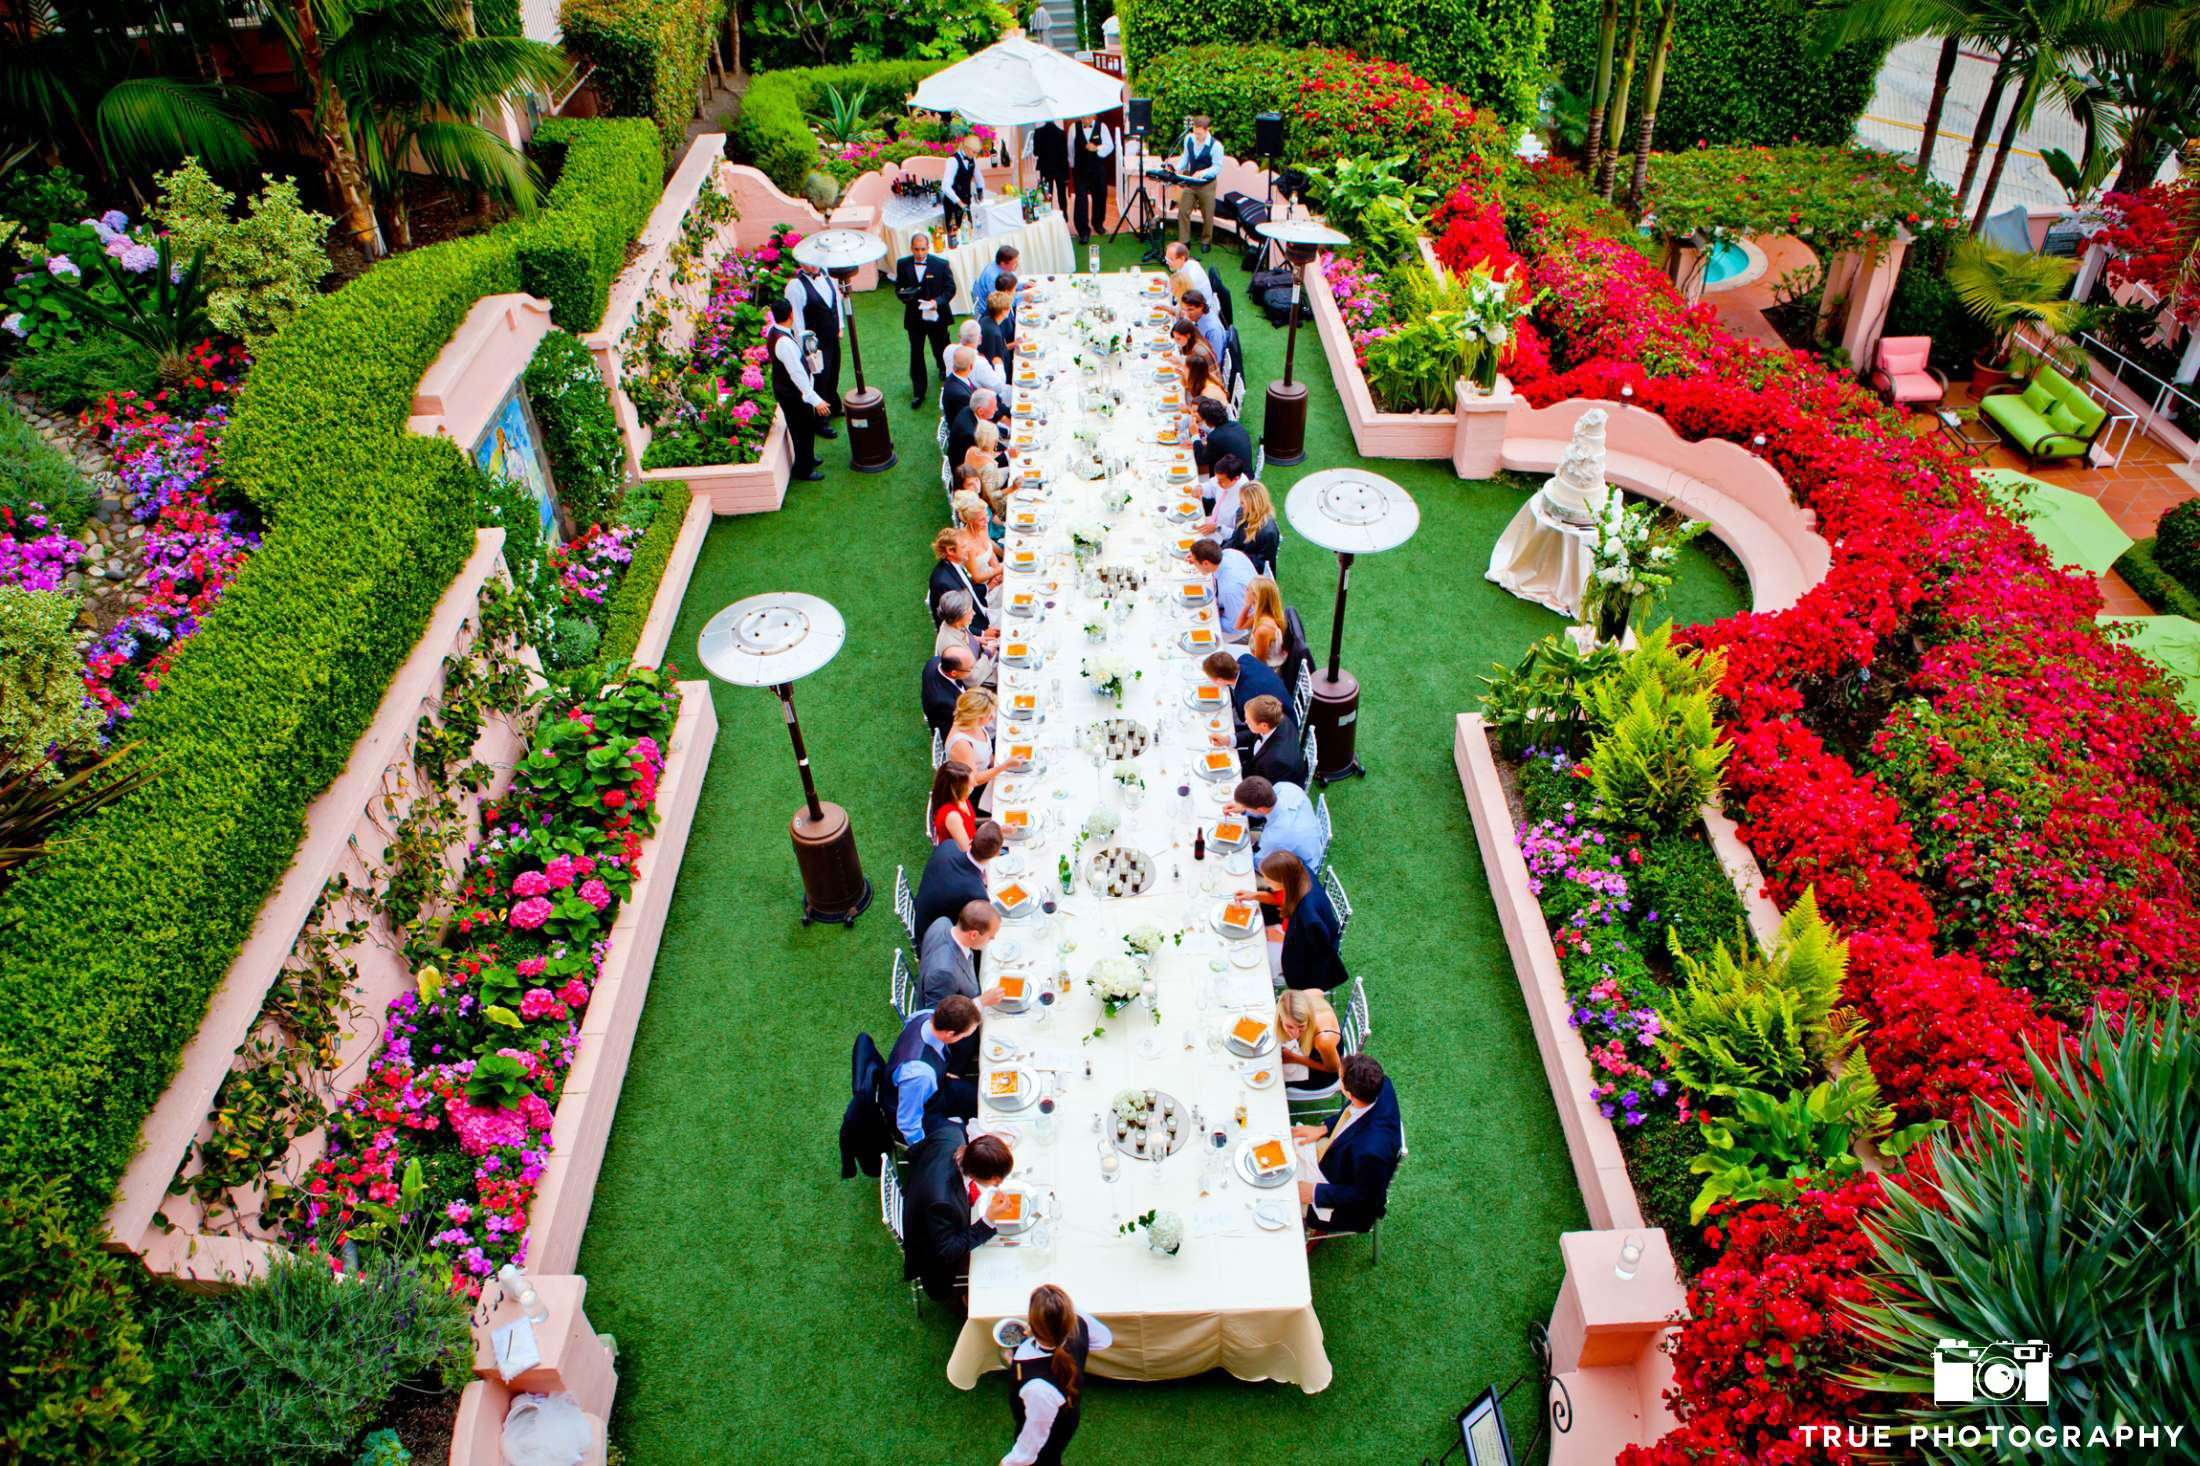 33 Best Outdoor Garden Wedding Venues Where To Host A Garden Wedding Near Me